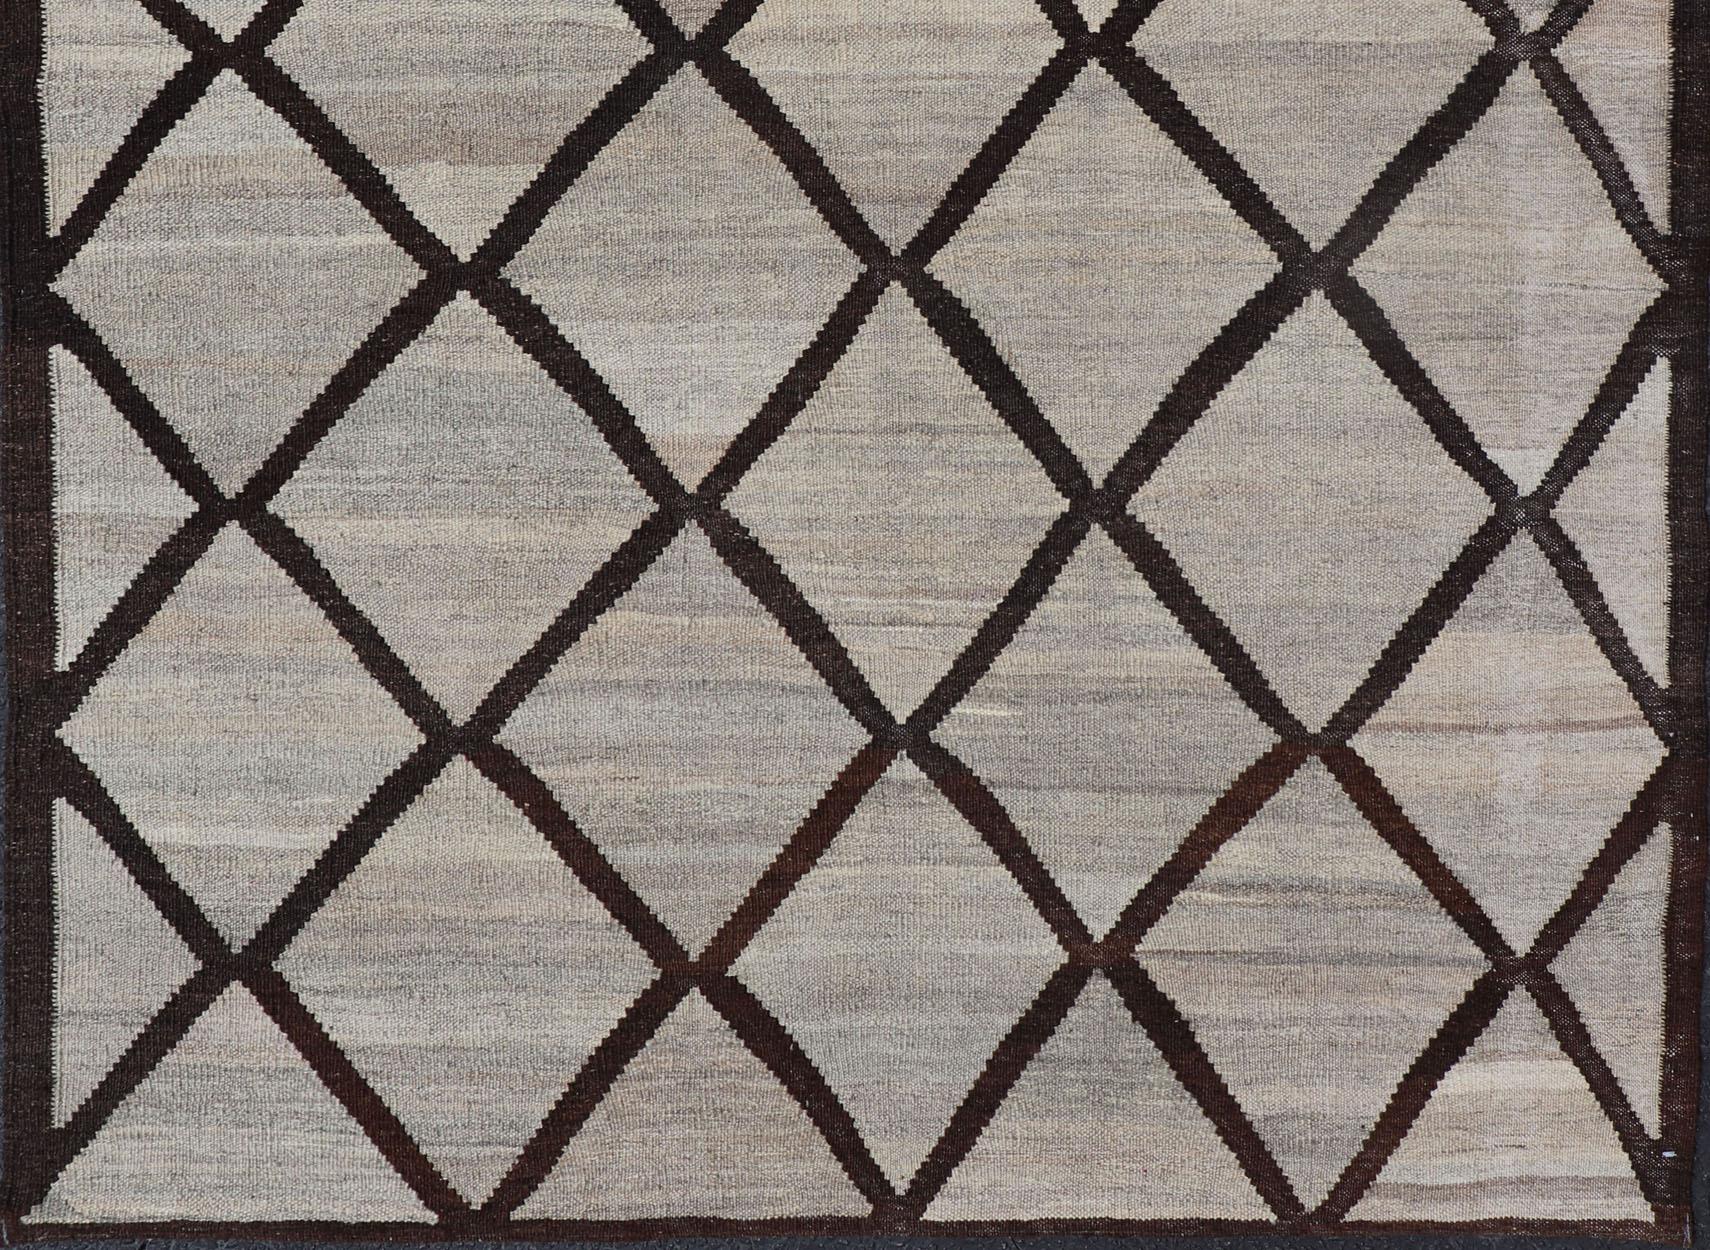 Hand-Woven Natural Color-Tone Flat-Weave Kilim in Diamond Design For Sale